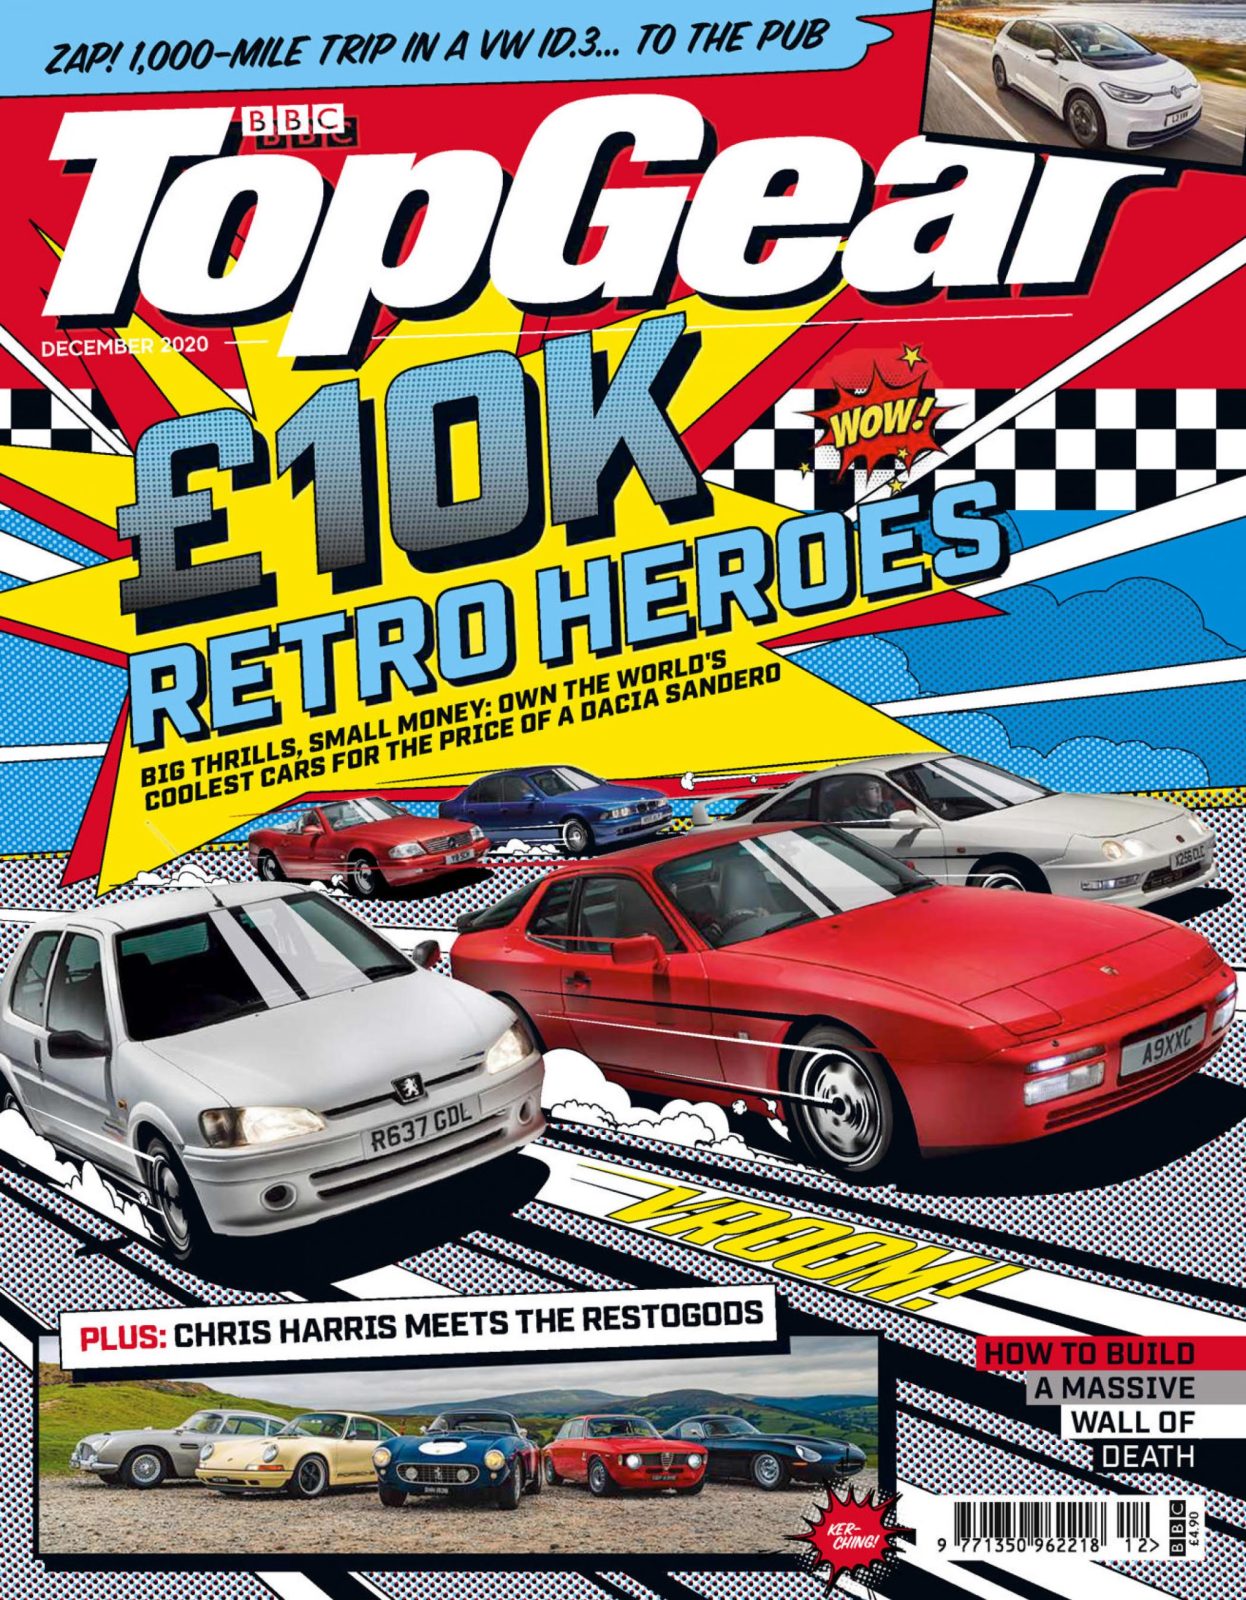 BBC Top Gear BBC疯狂汽车秀杂志 DECEMBER 2020年12月刊